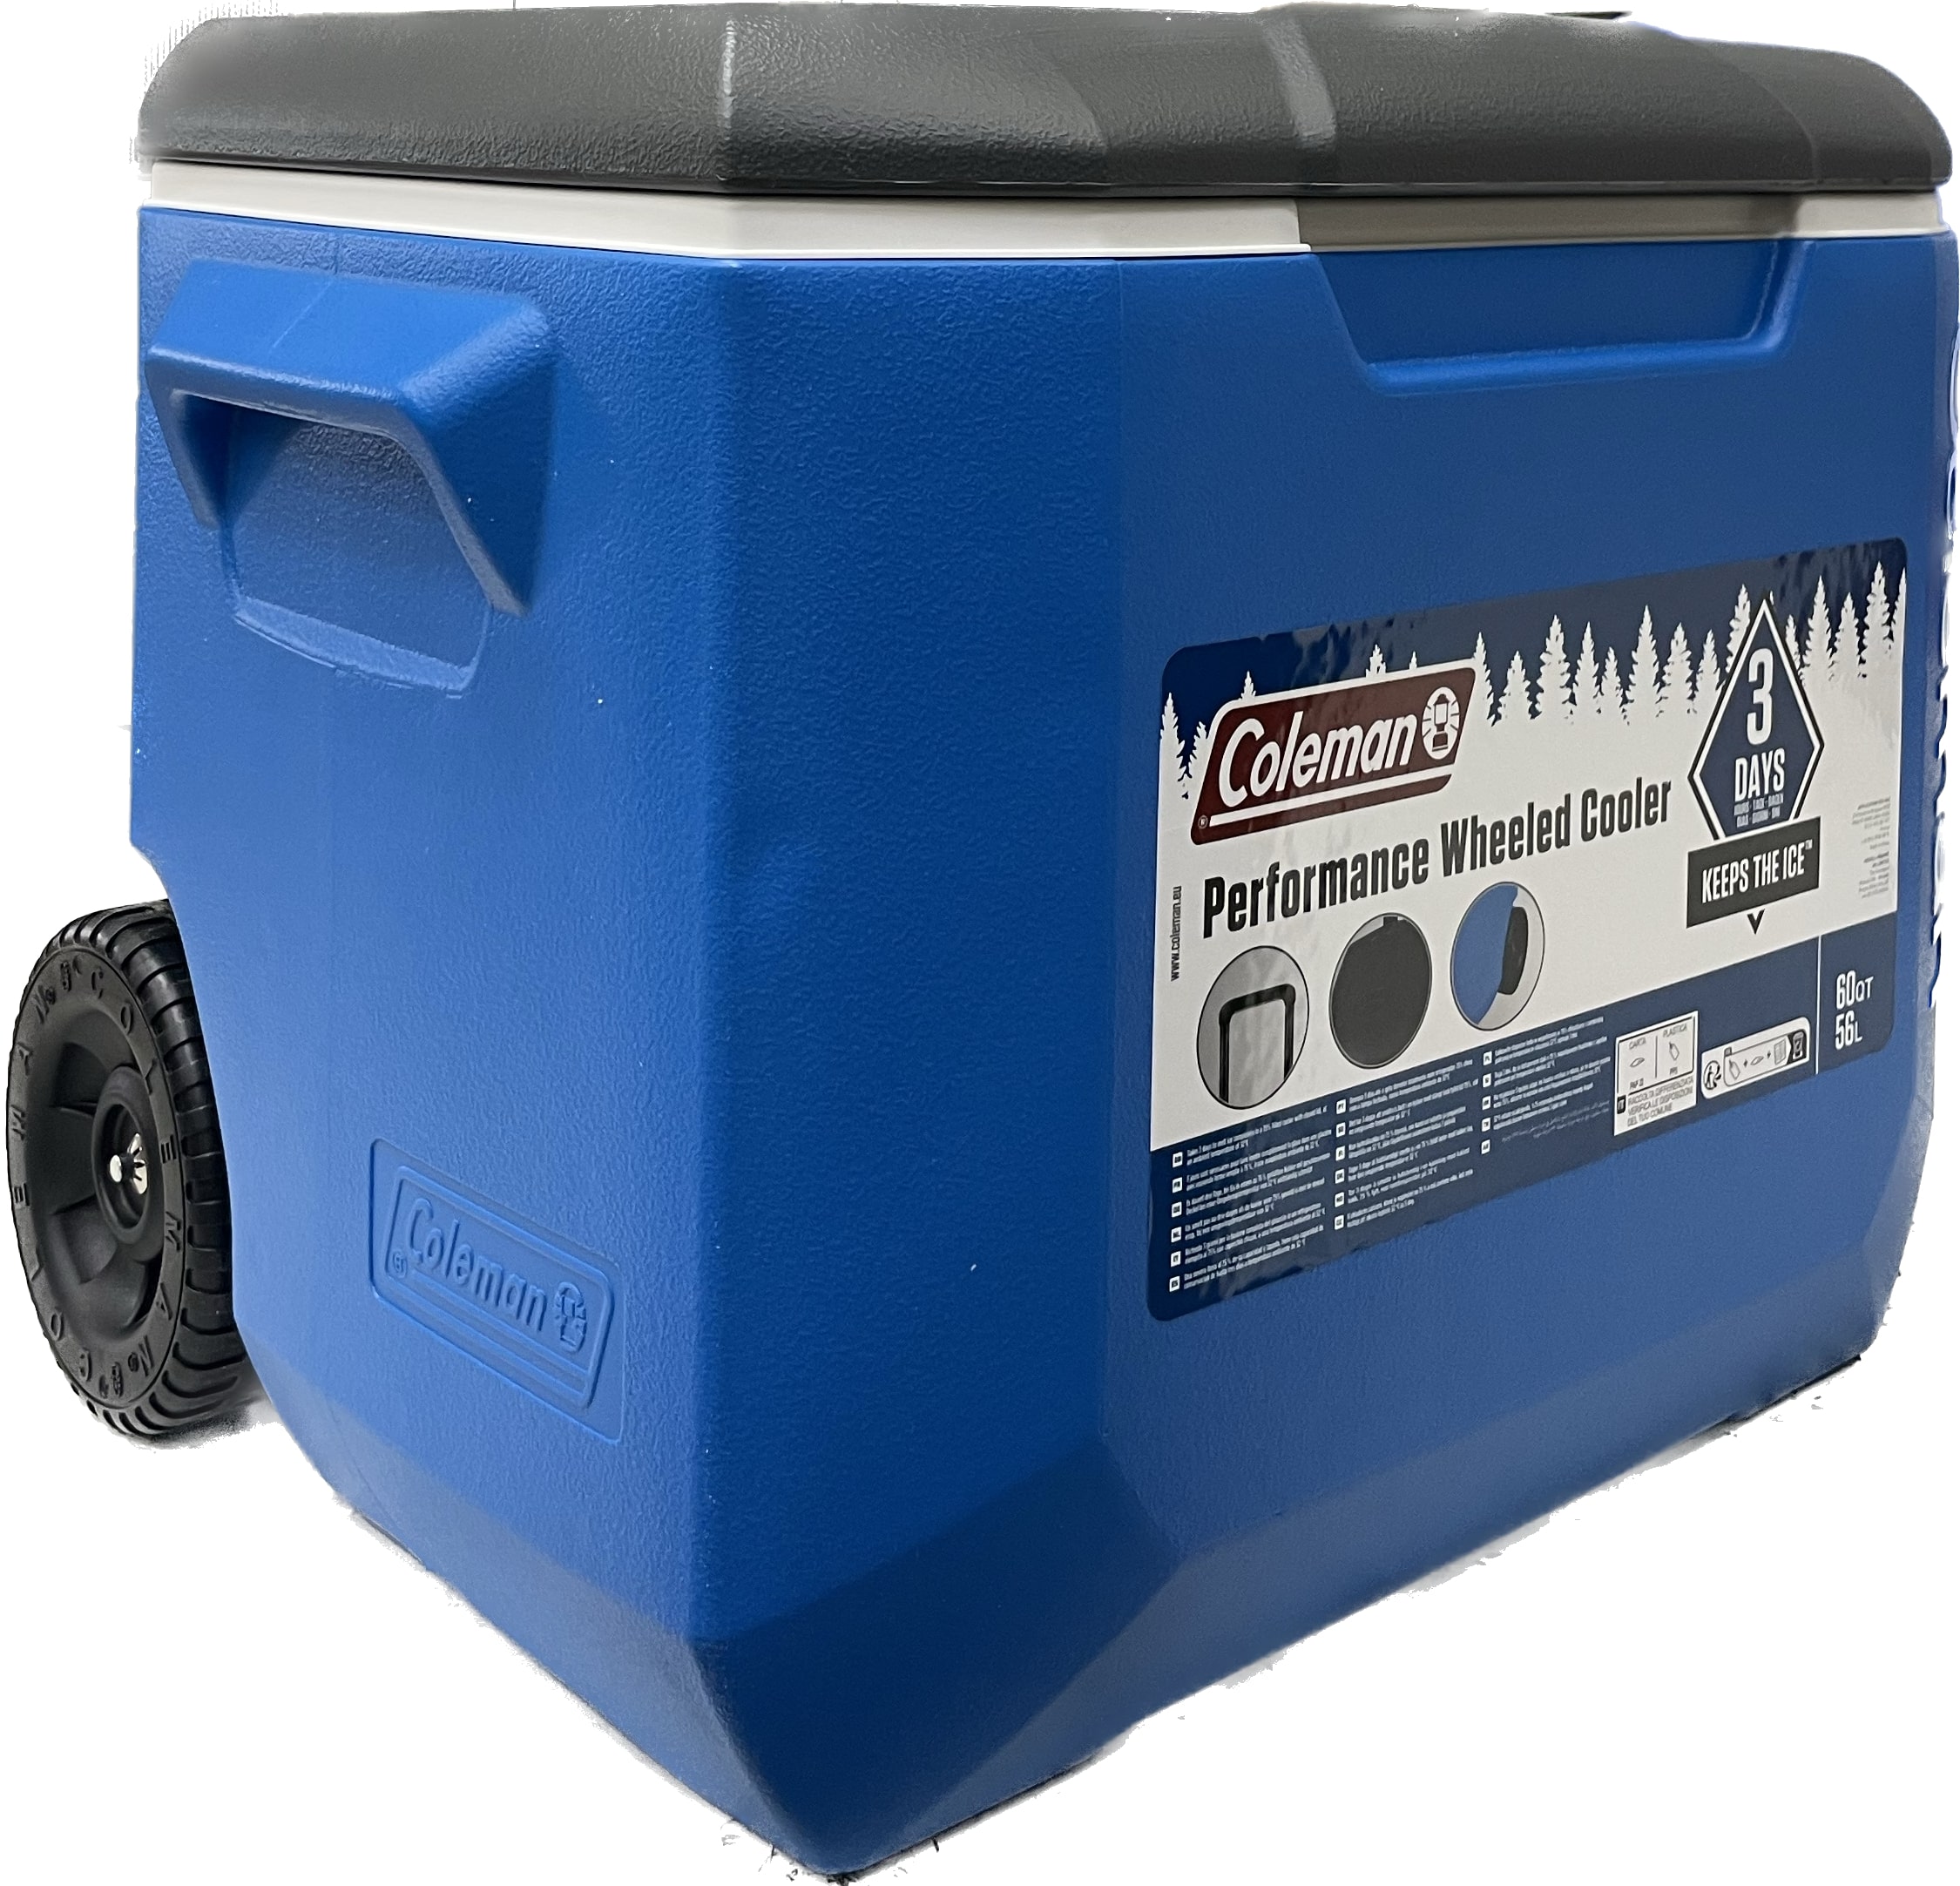 Coleman Performance Cooler Wheeled 60 Qt 56 Liter Kühlbox blau 2000036084, Coleman, Outdoor, Haus & Garten